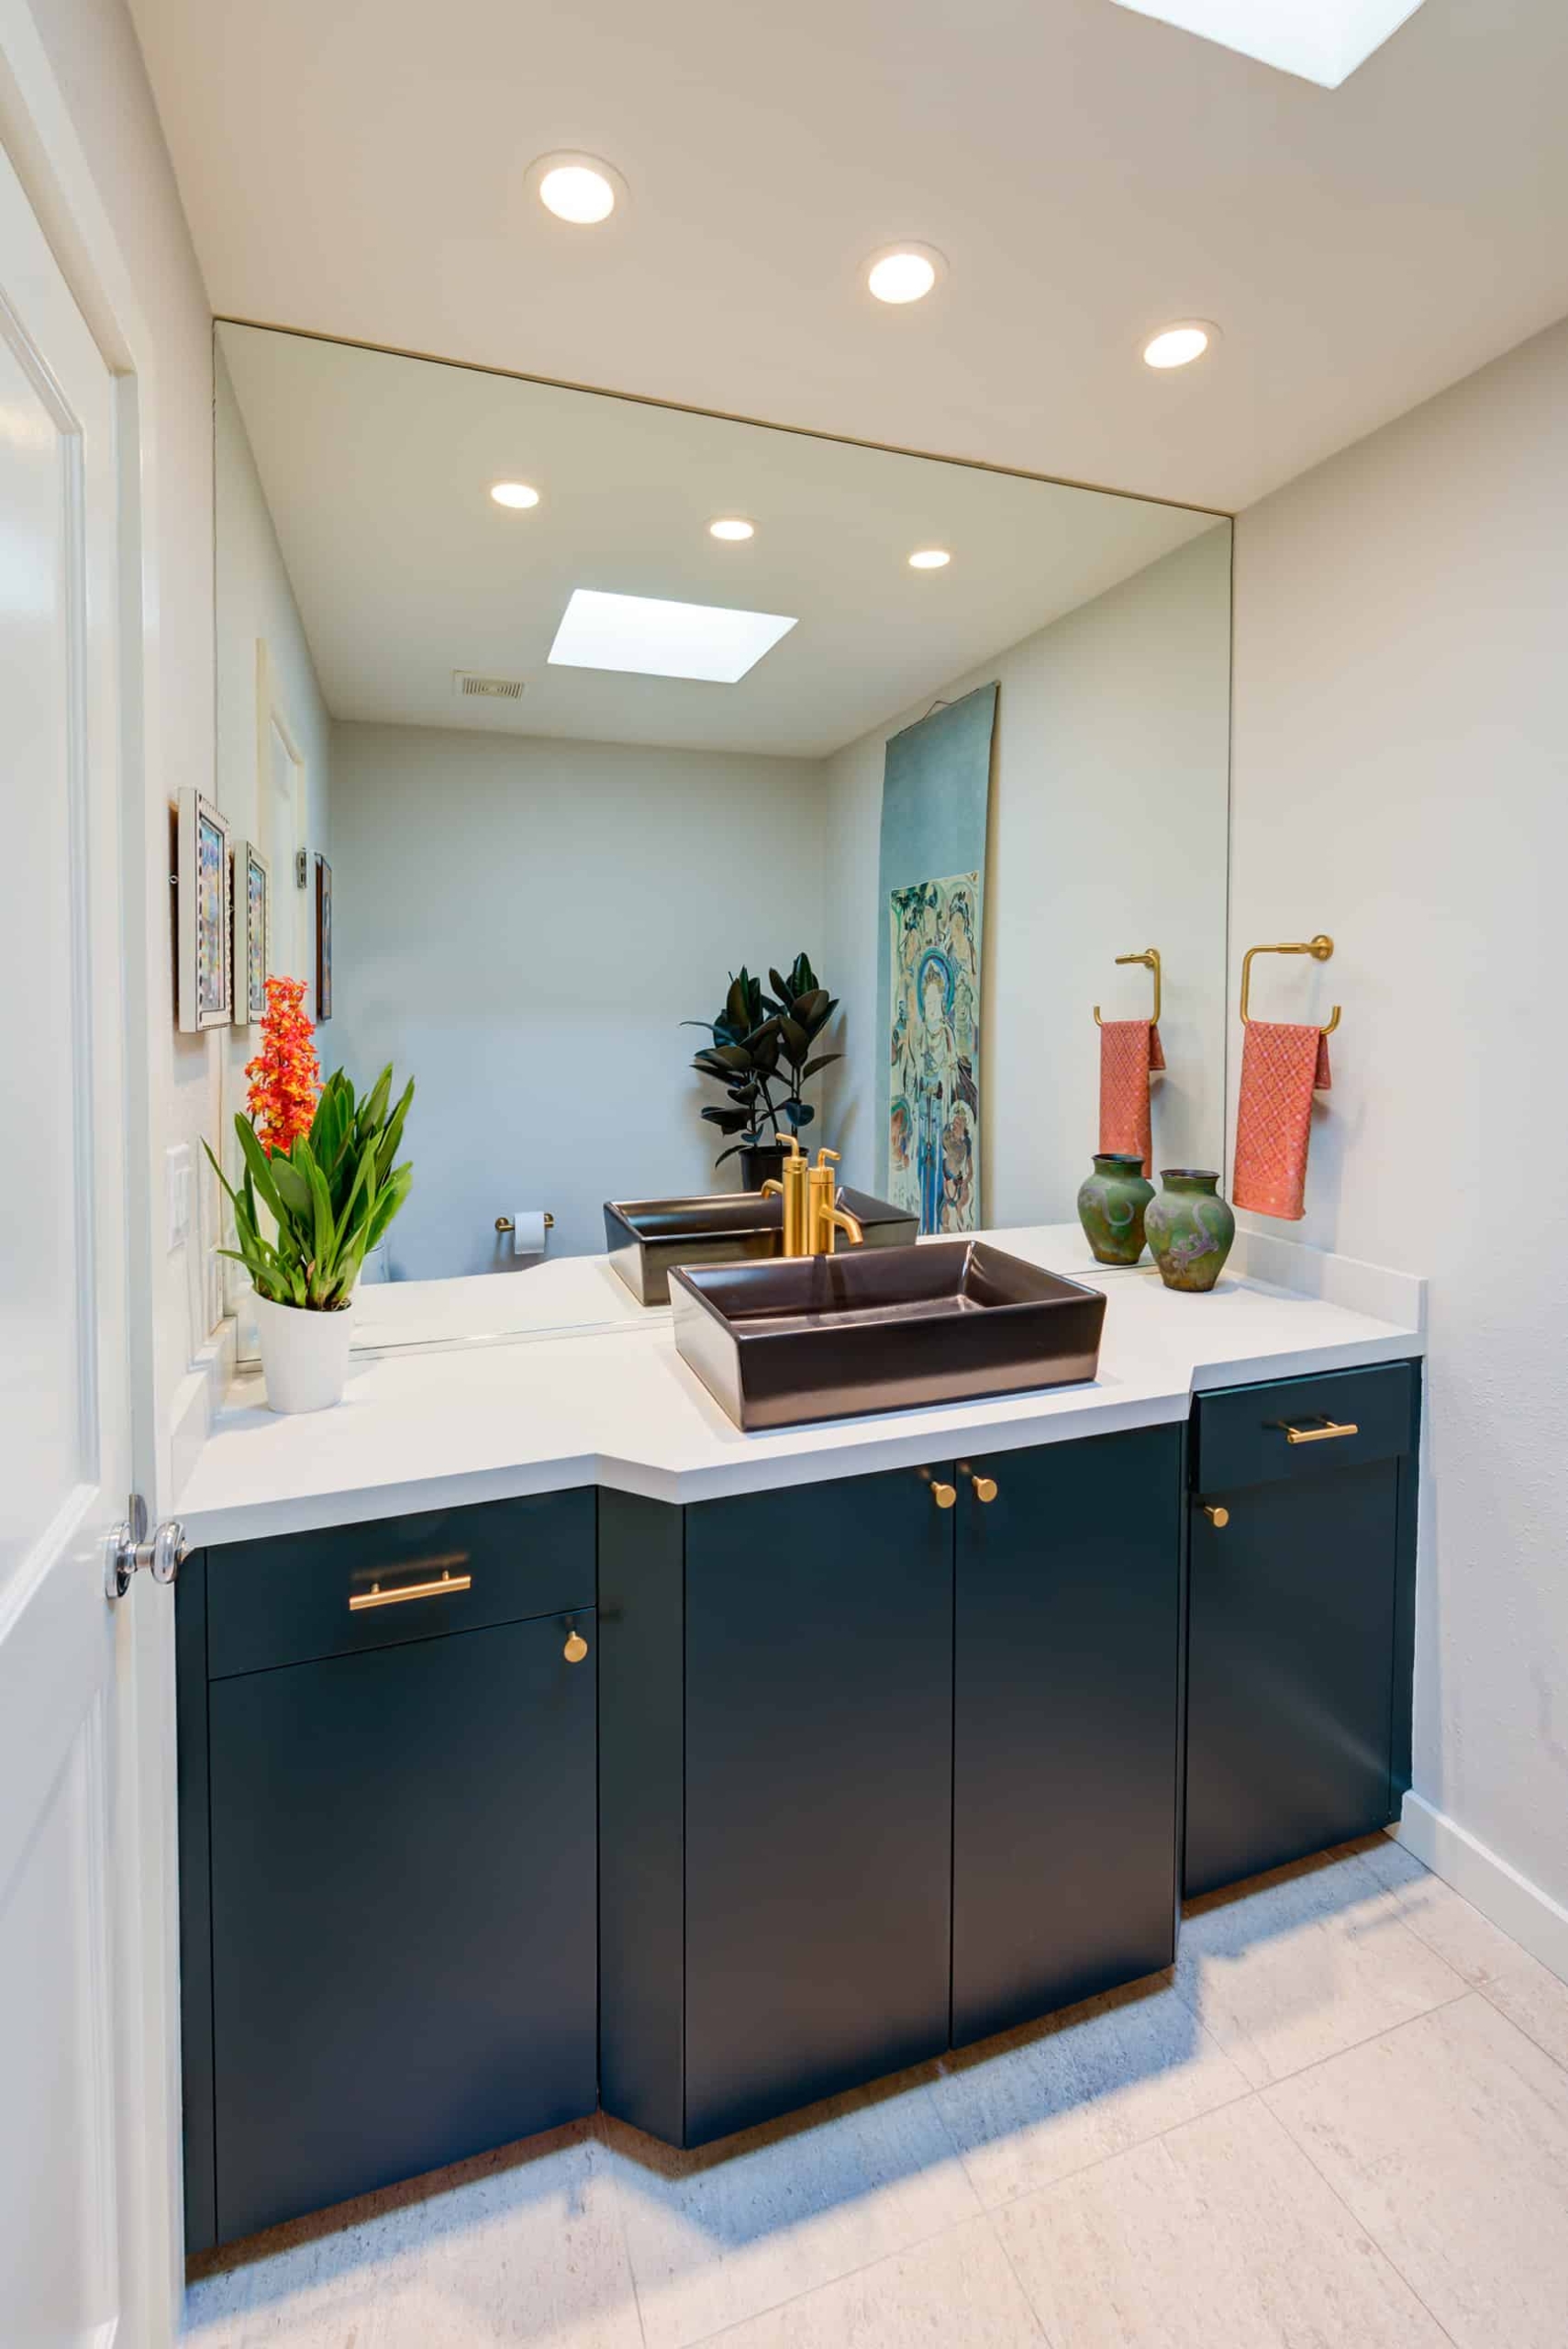 Recent bathroom renovation featuring blue modern cabinets.